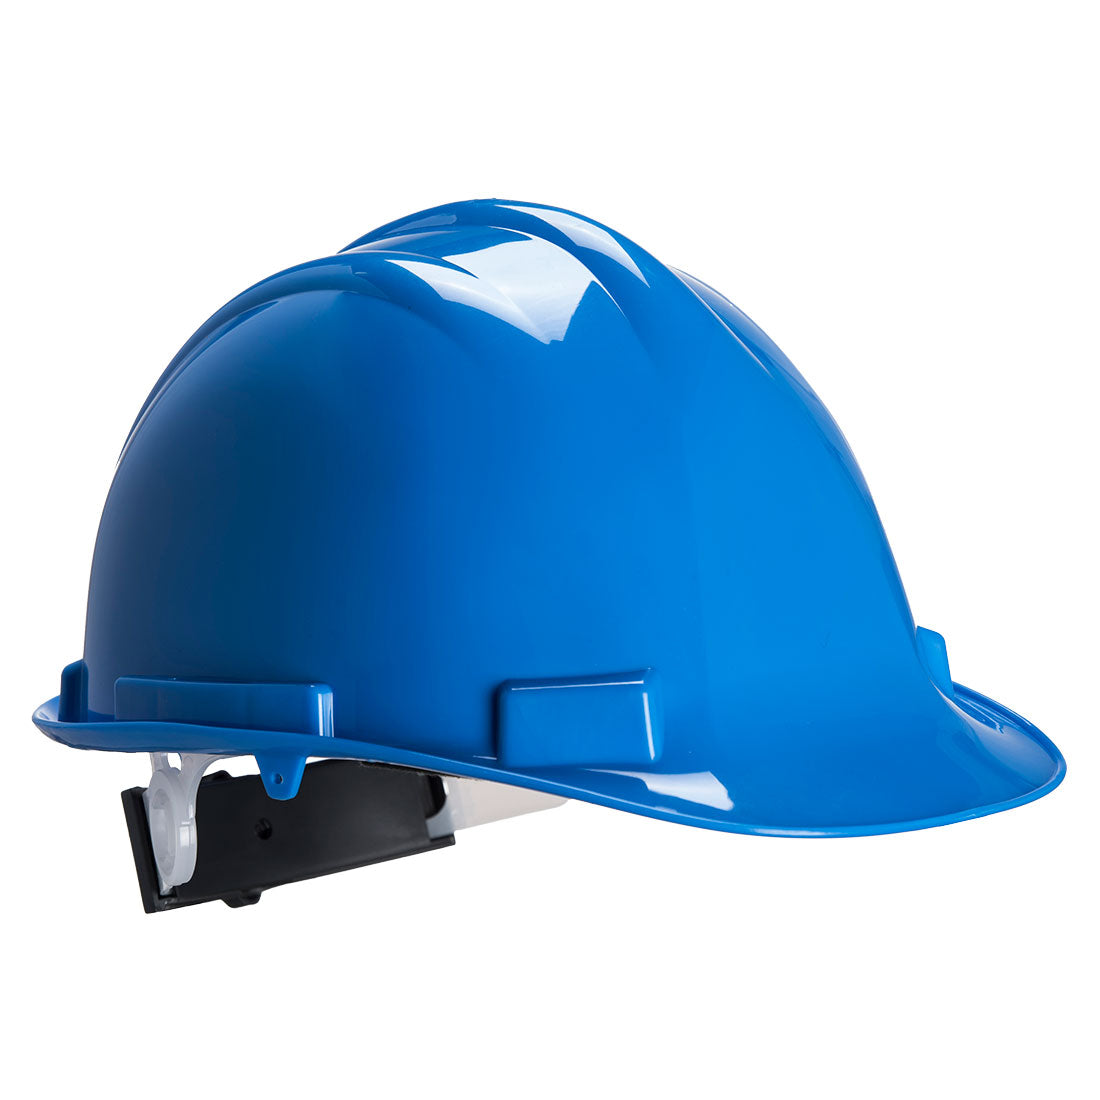 Portwest PW50 Expertbase Royal Blue Safety Helmet